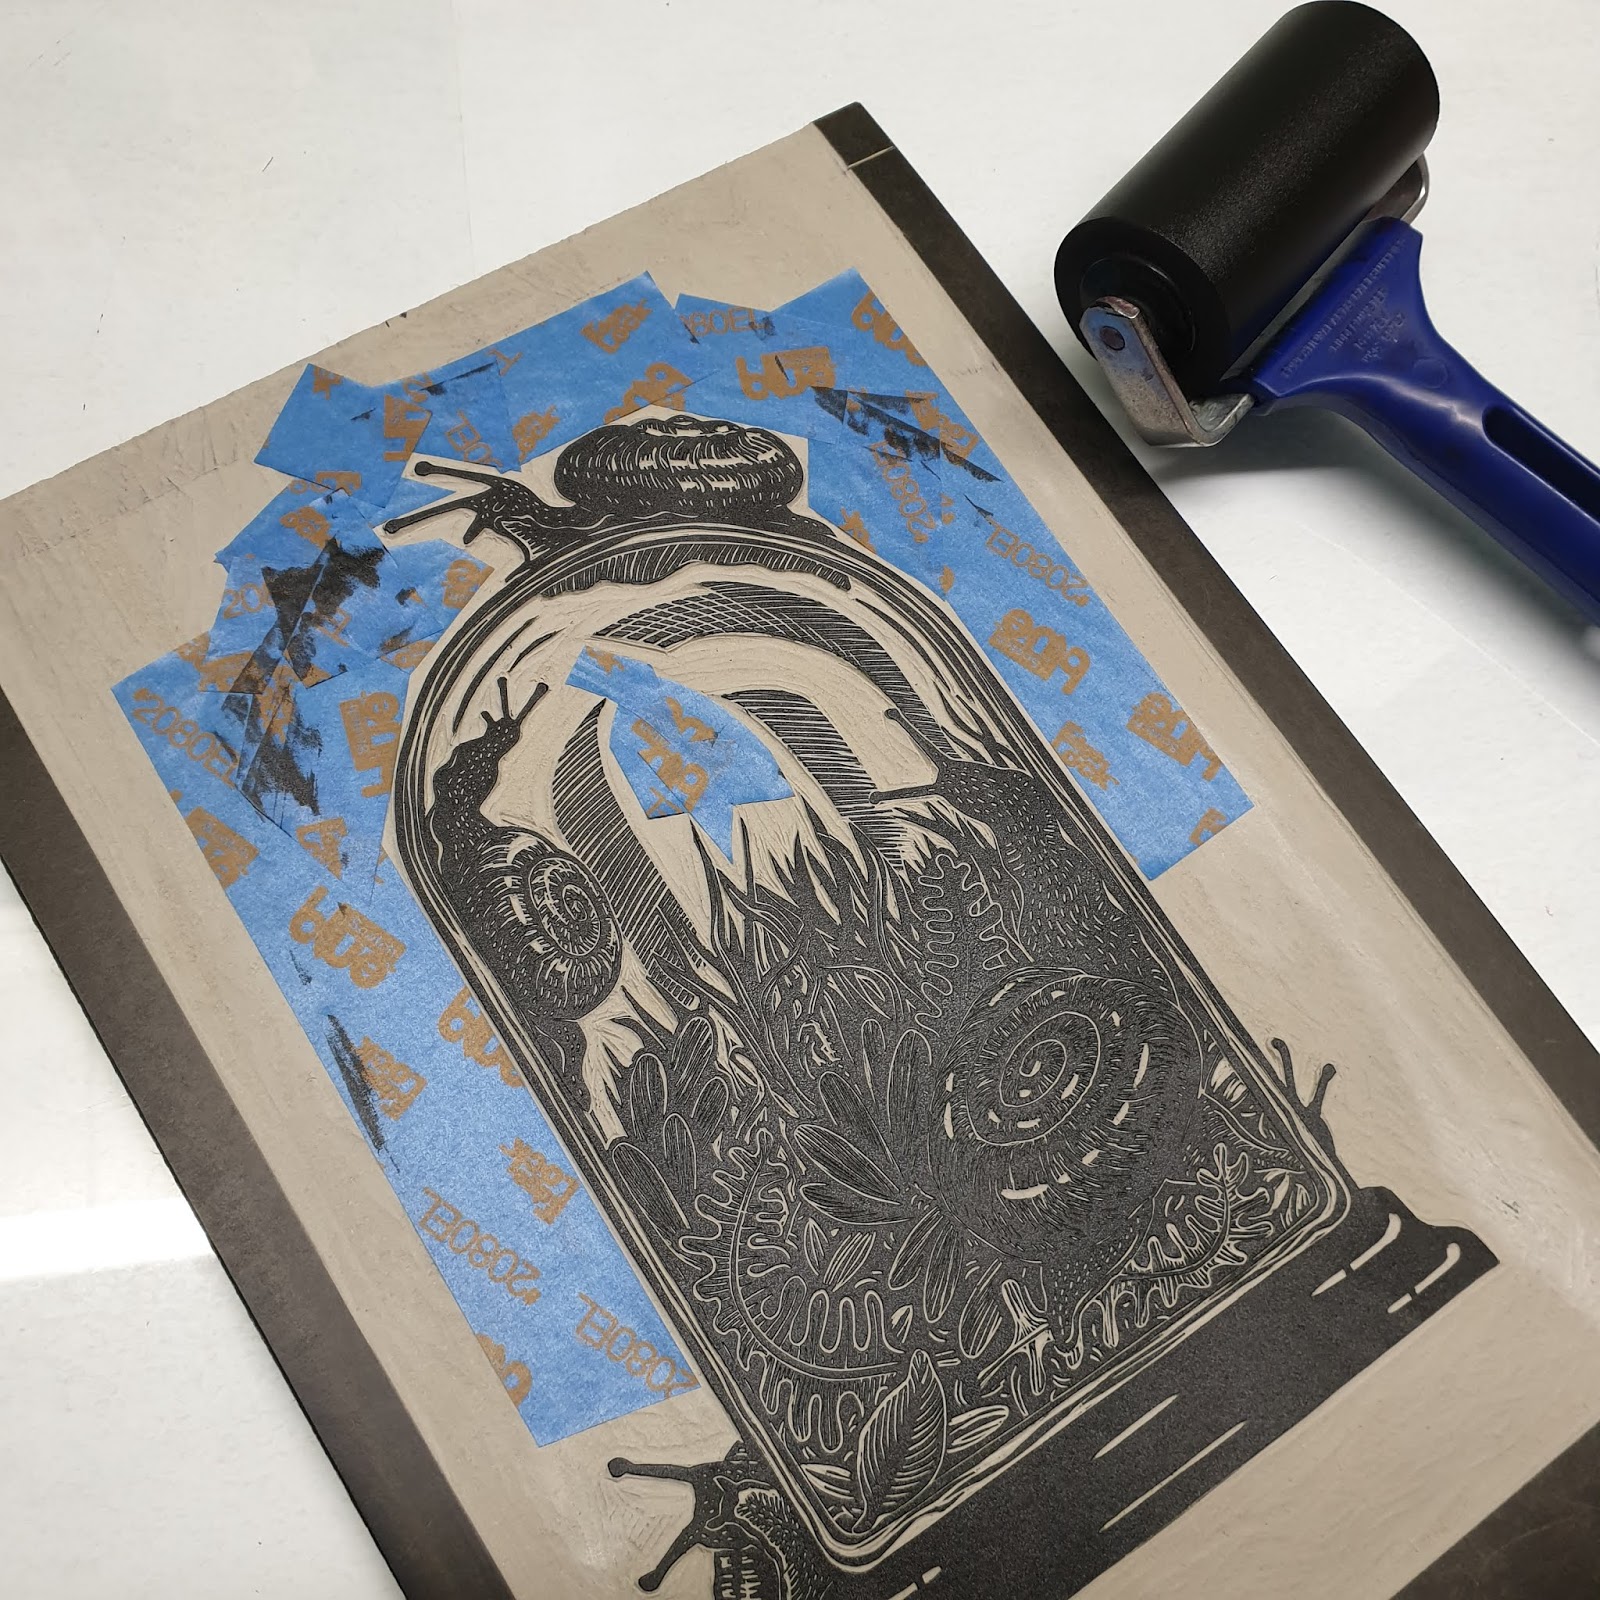 Speedball Fabric Block Printing Ink Review: Long-Term Test — Linocut Artist